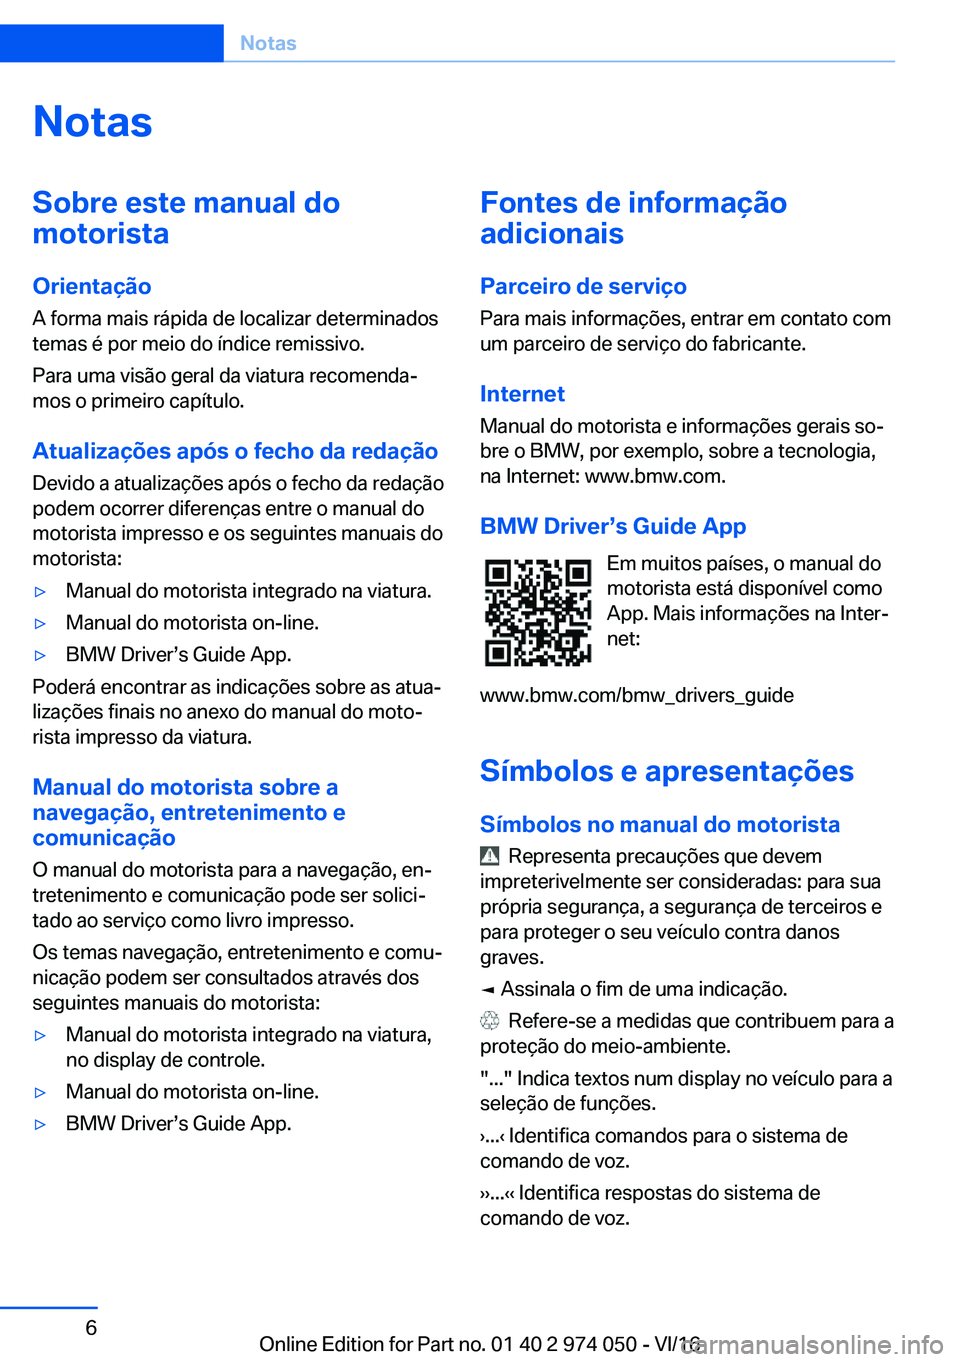 BMW M3 2017  Manual do condutor (in Portuguese) �N�o�t�a�s�S�o�b�r�e��e�s�t�e��m�a�n�u�a�l��d�o
�m�o�t�o�r�i�s�t�a
�O�r�i�e�n�t�a�